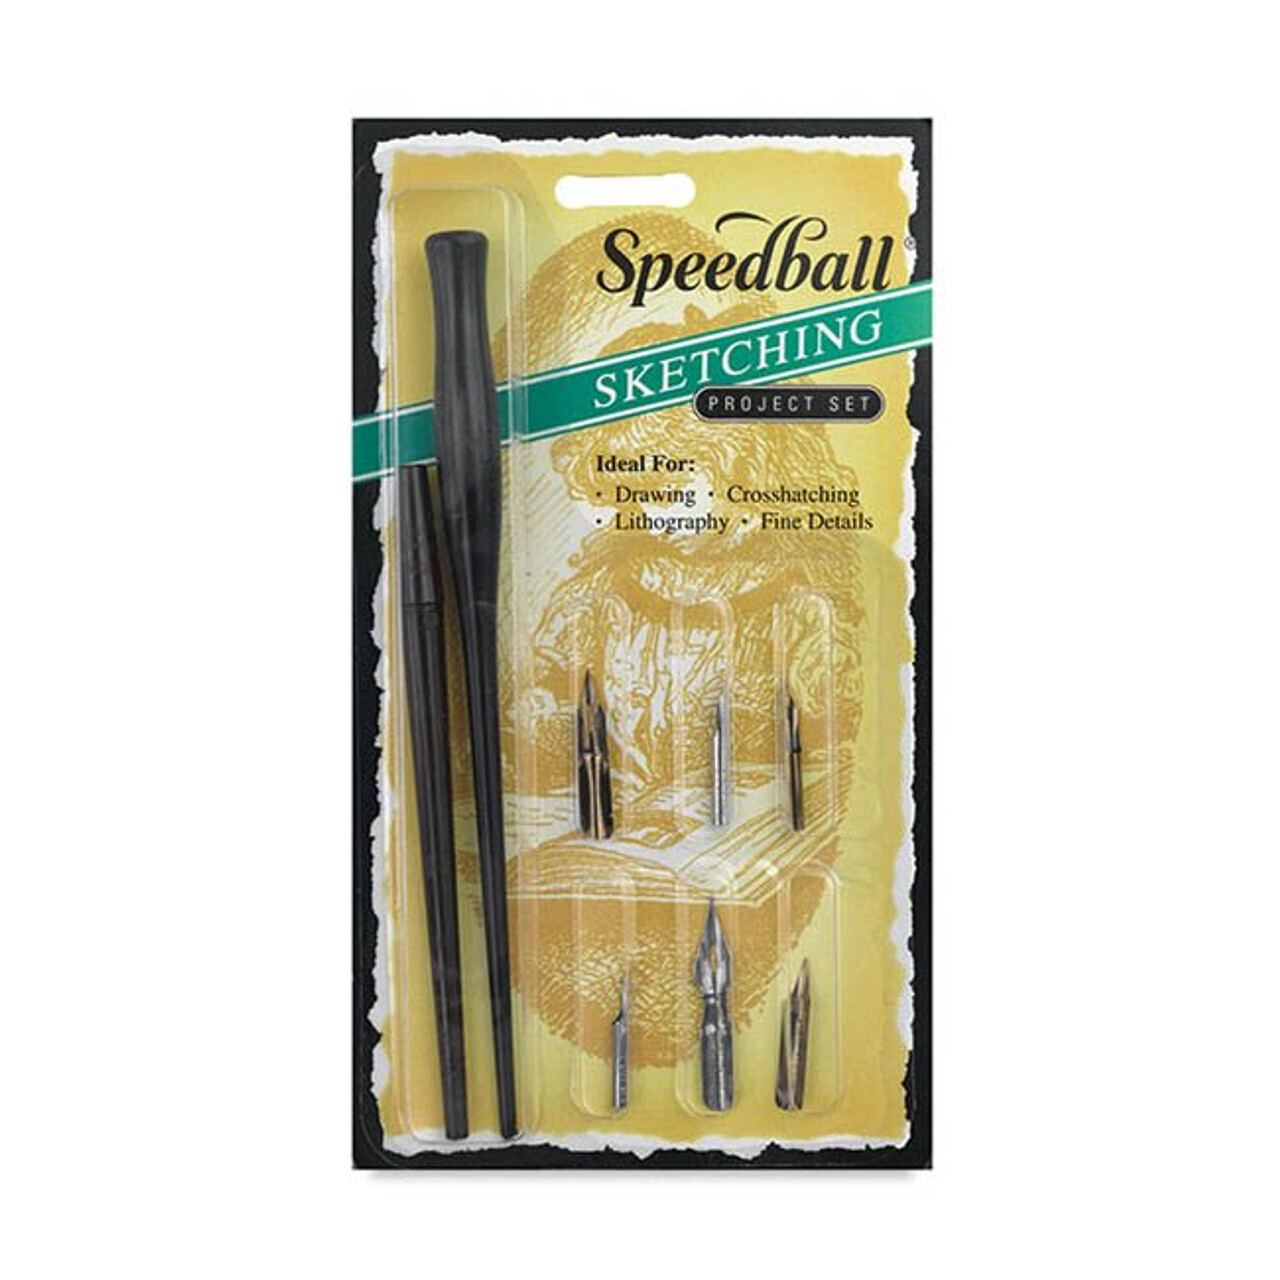 Speedball Sketching Project 8pc Pen Set